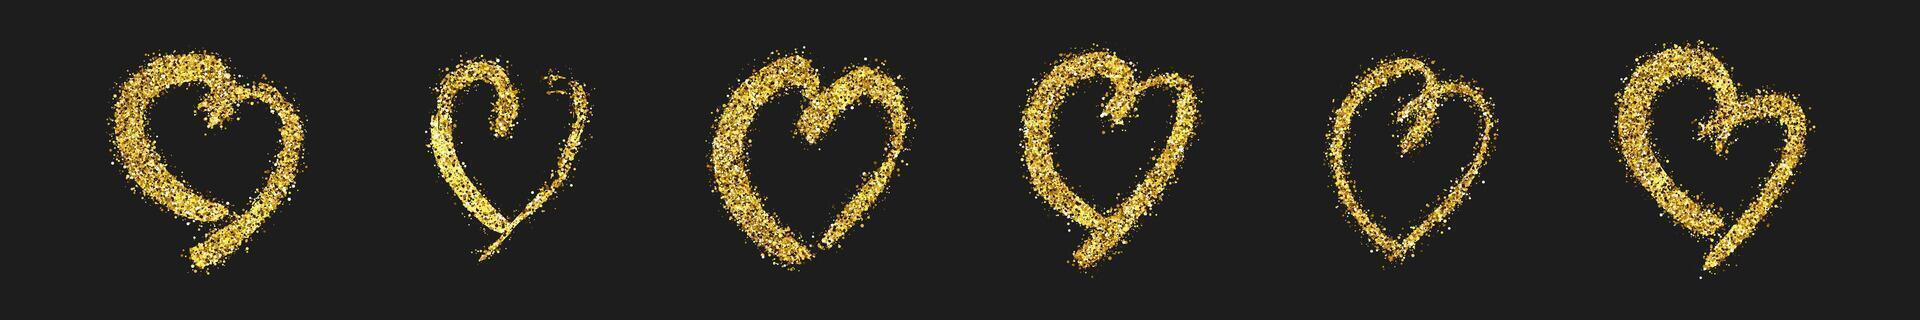 Set of six gold glitter doodle hearts on dark background. Gold grunge hand drawn heart. Romantic love symbol. Vector illustration.